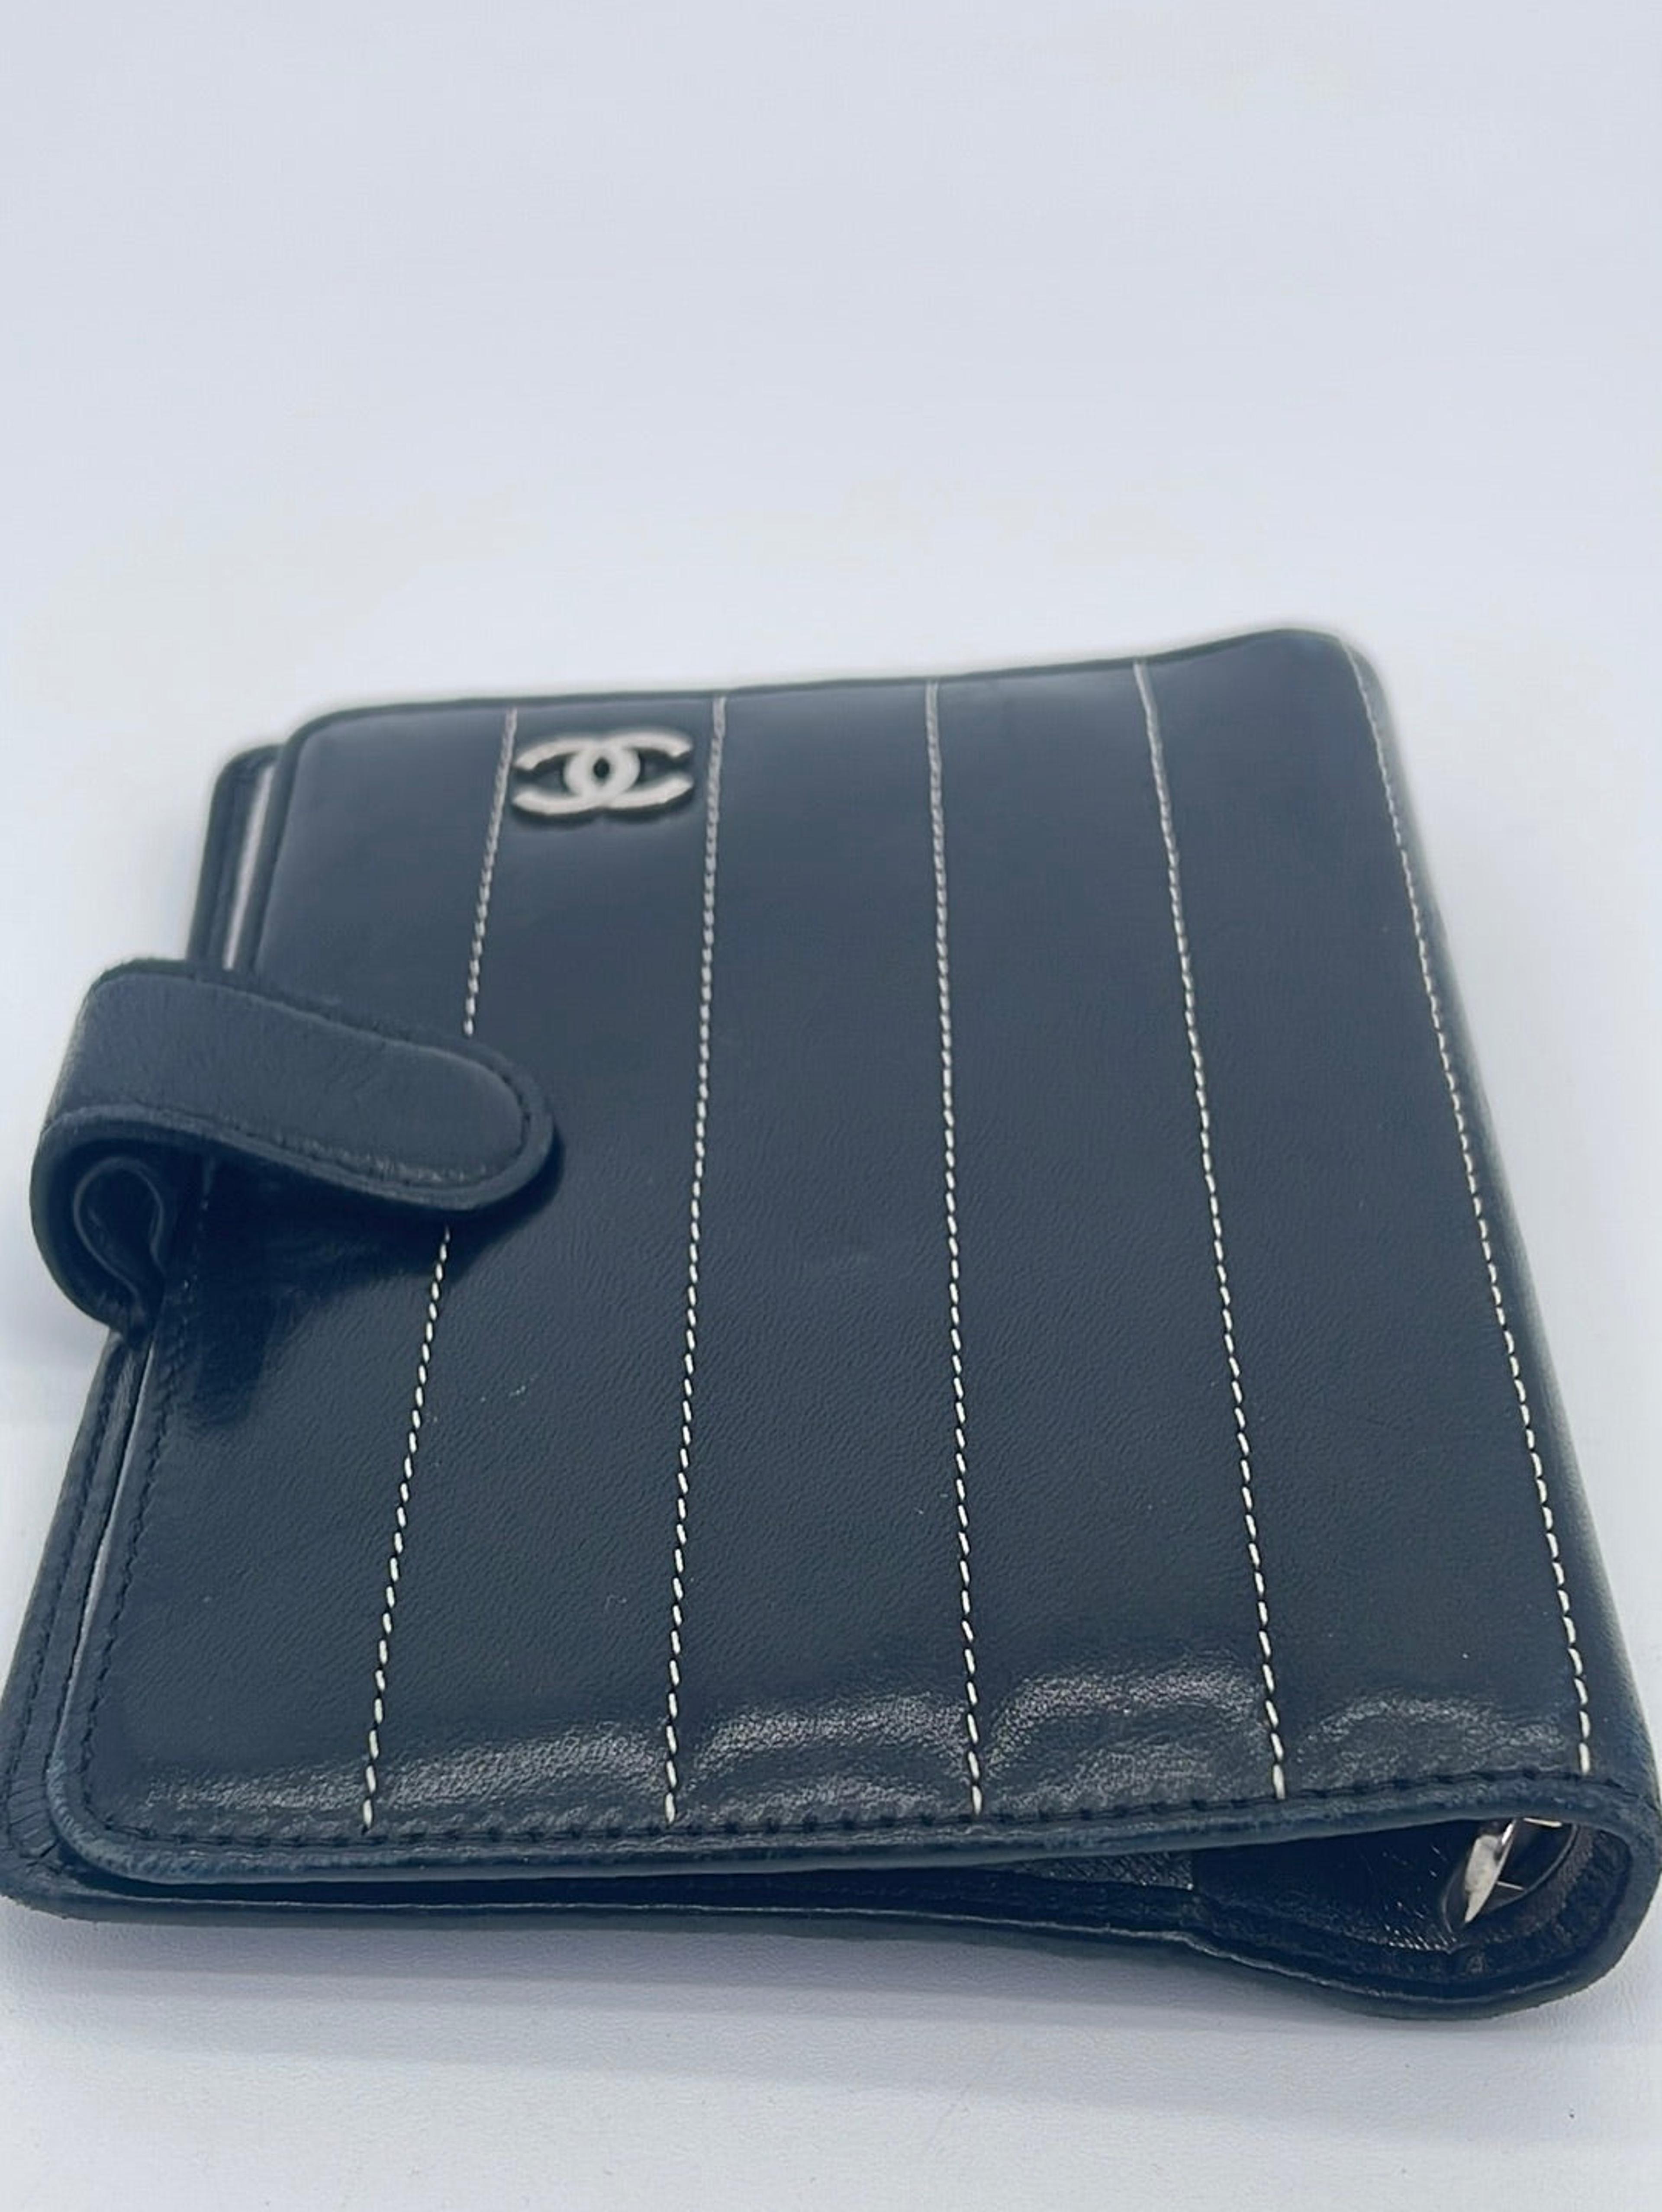 NTWRK - Preloved CHANEL Black Leather Agenda Notebook Cover 10399342 052